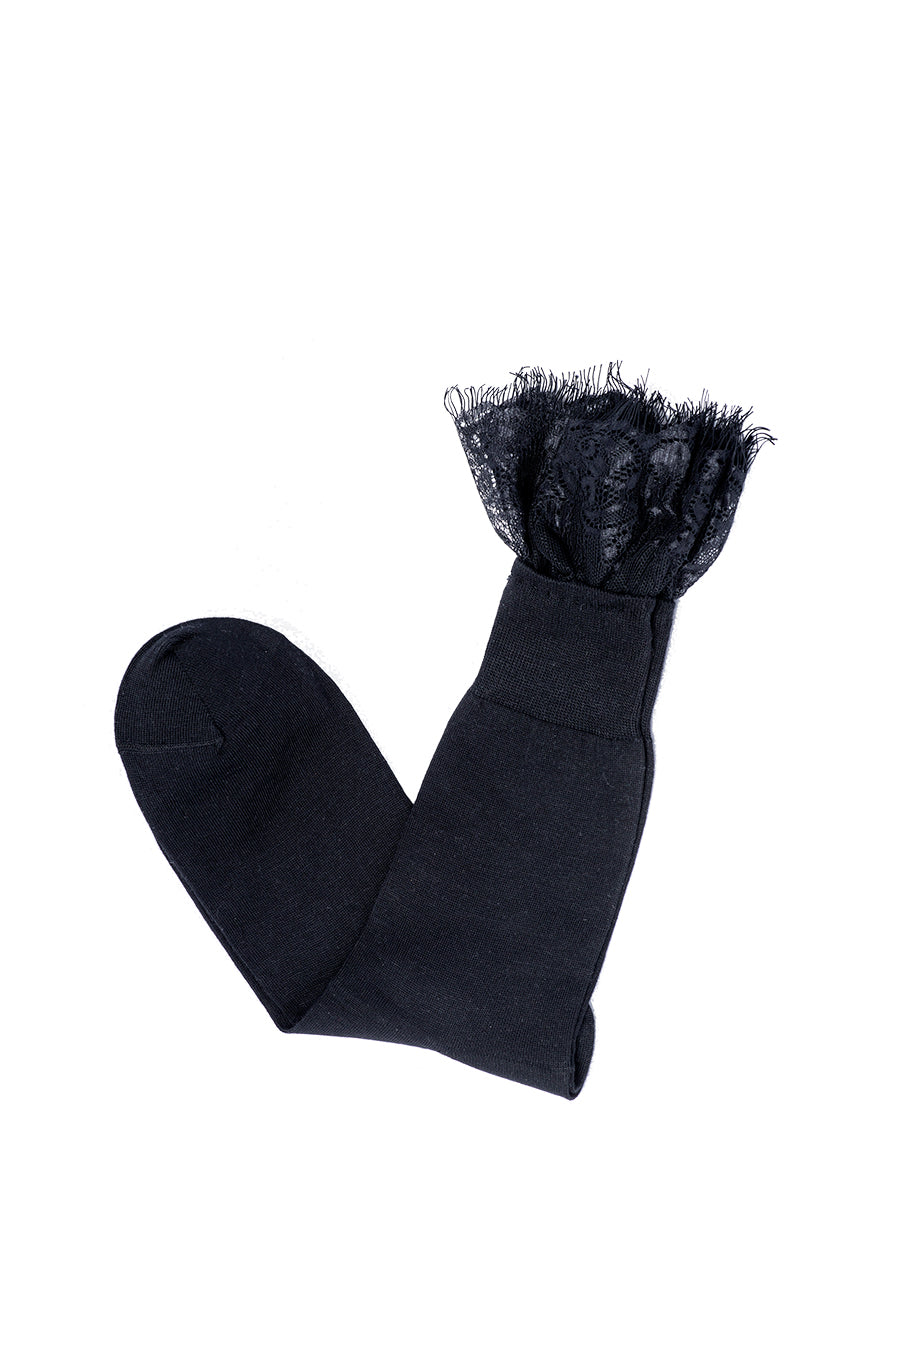 Socks Black Lace  